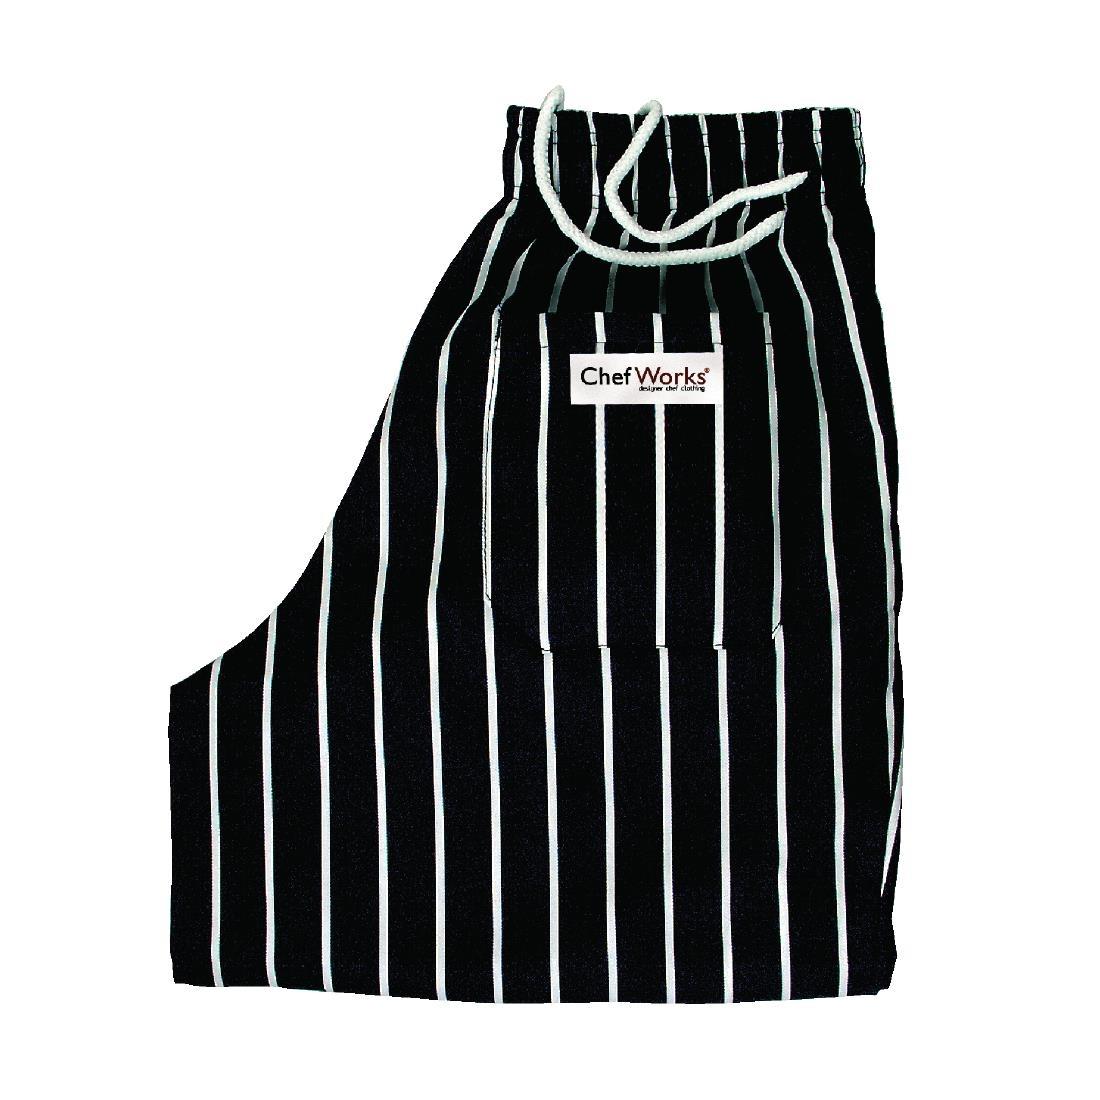 Chef Works Designer Baggy Pant Chalk Stripe 4XL - A940-4XL  - 2